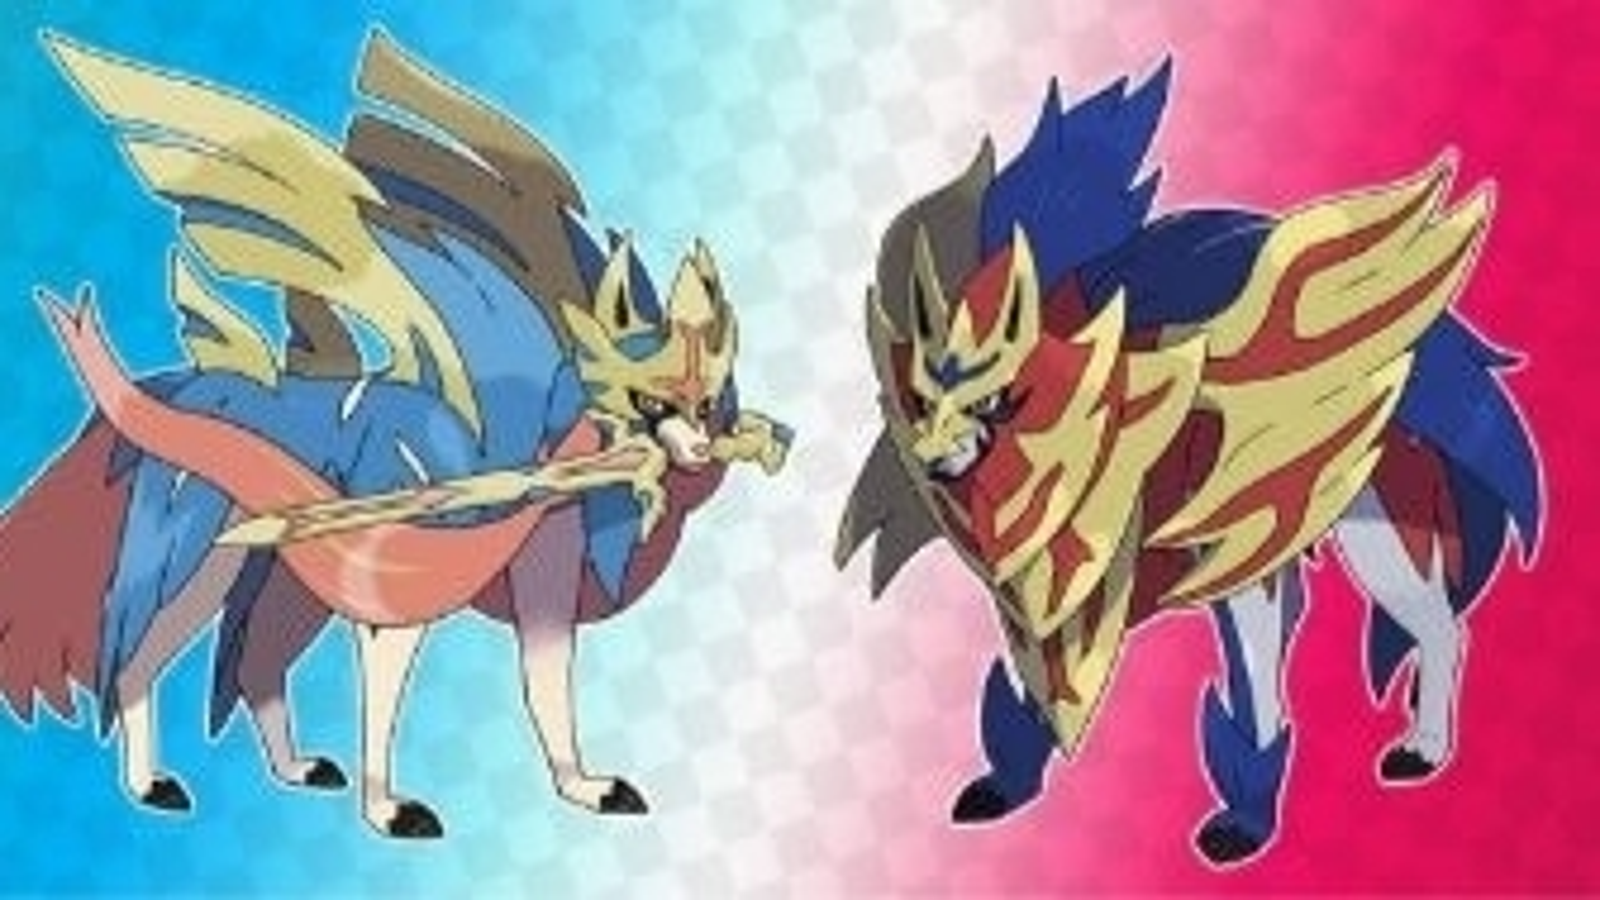 Pokémon Sword and Pokémon Shield